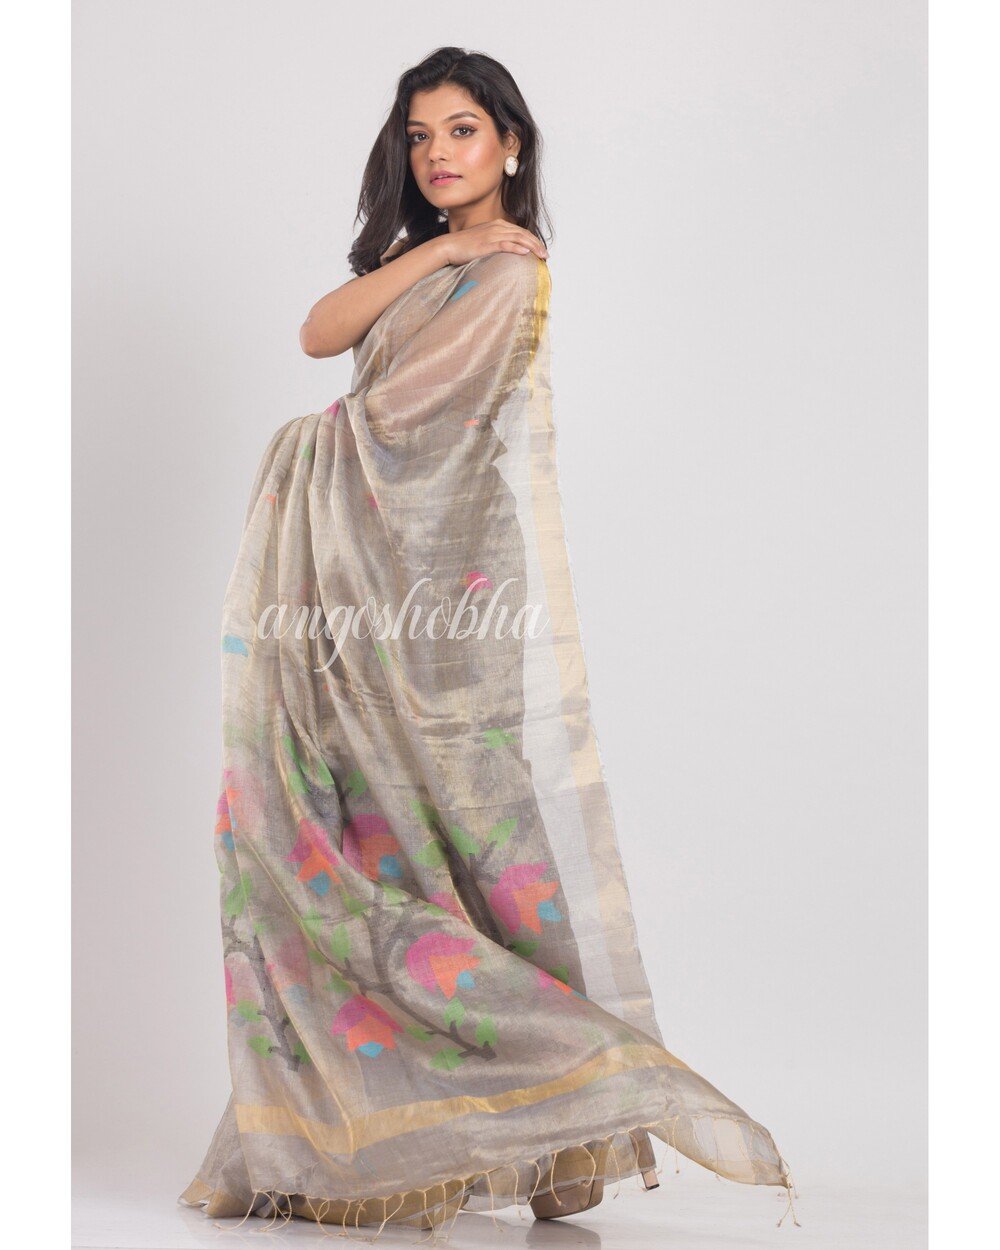 Women's Silver Grey Tussar Silk Jamdani Saree - Angoshobha